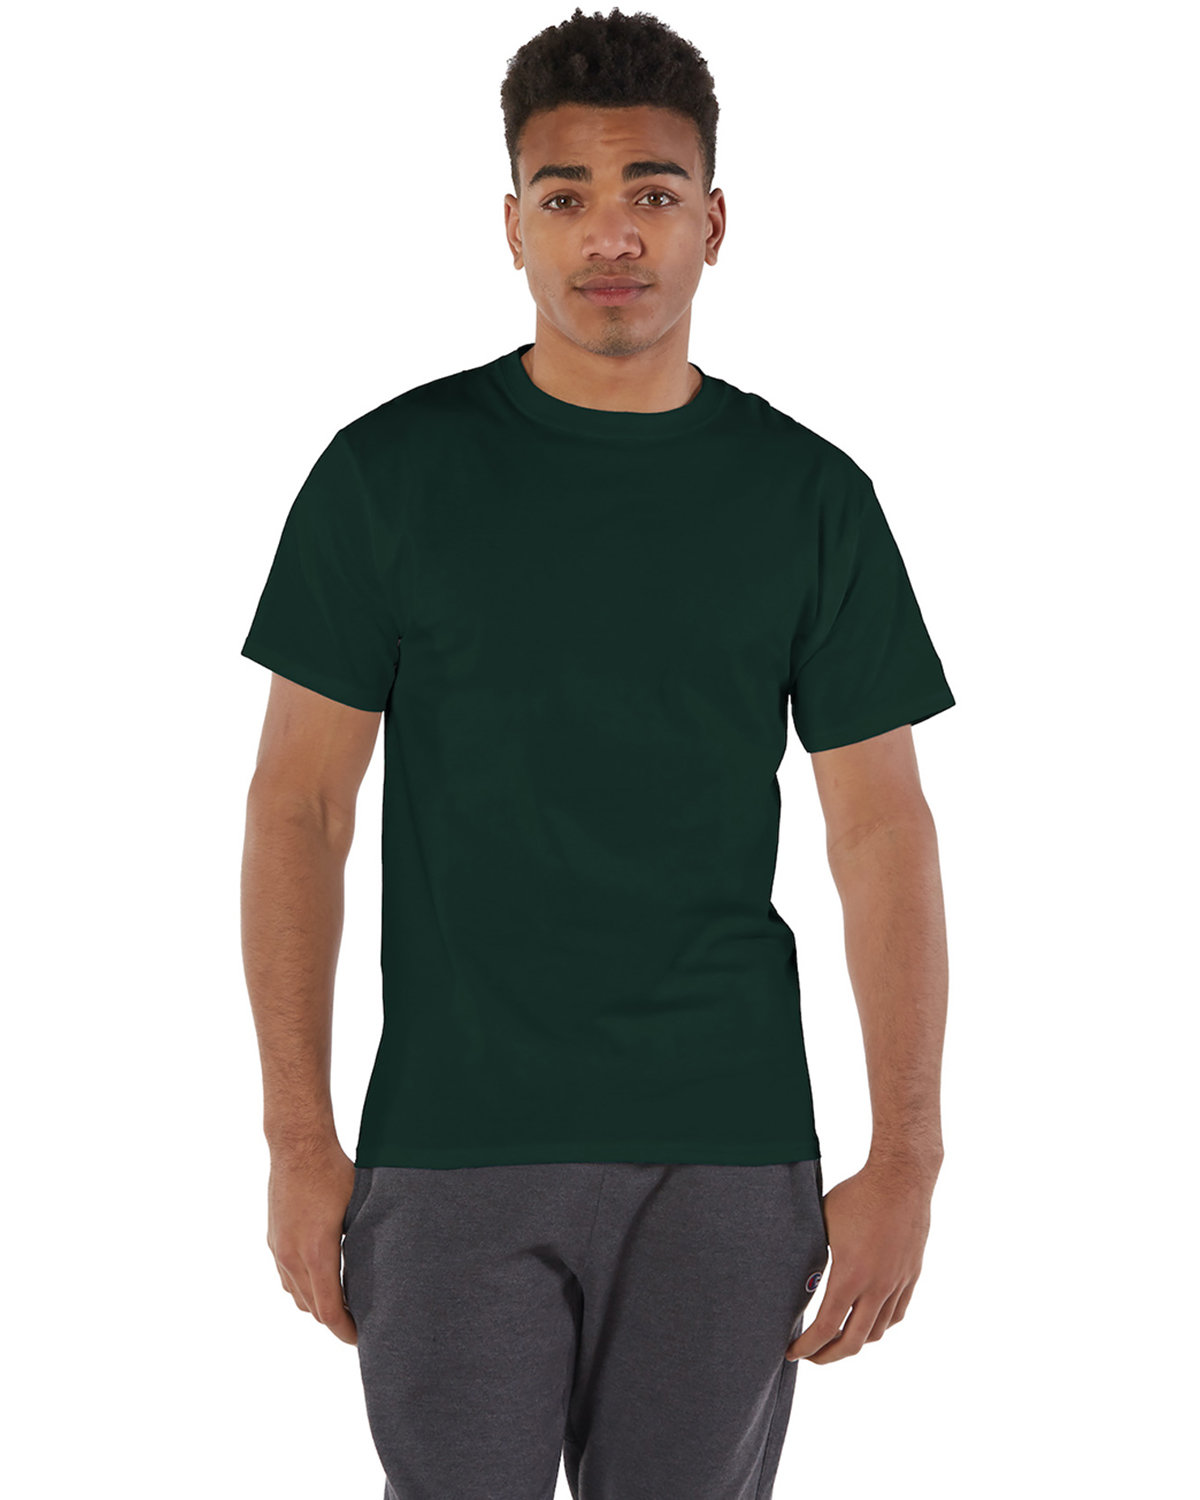 Champion Adult 6 oz. Short-Sleeve T-Shirt DARK GREEN 